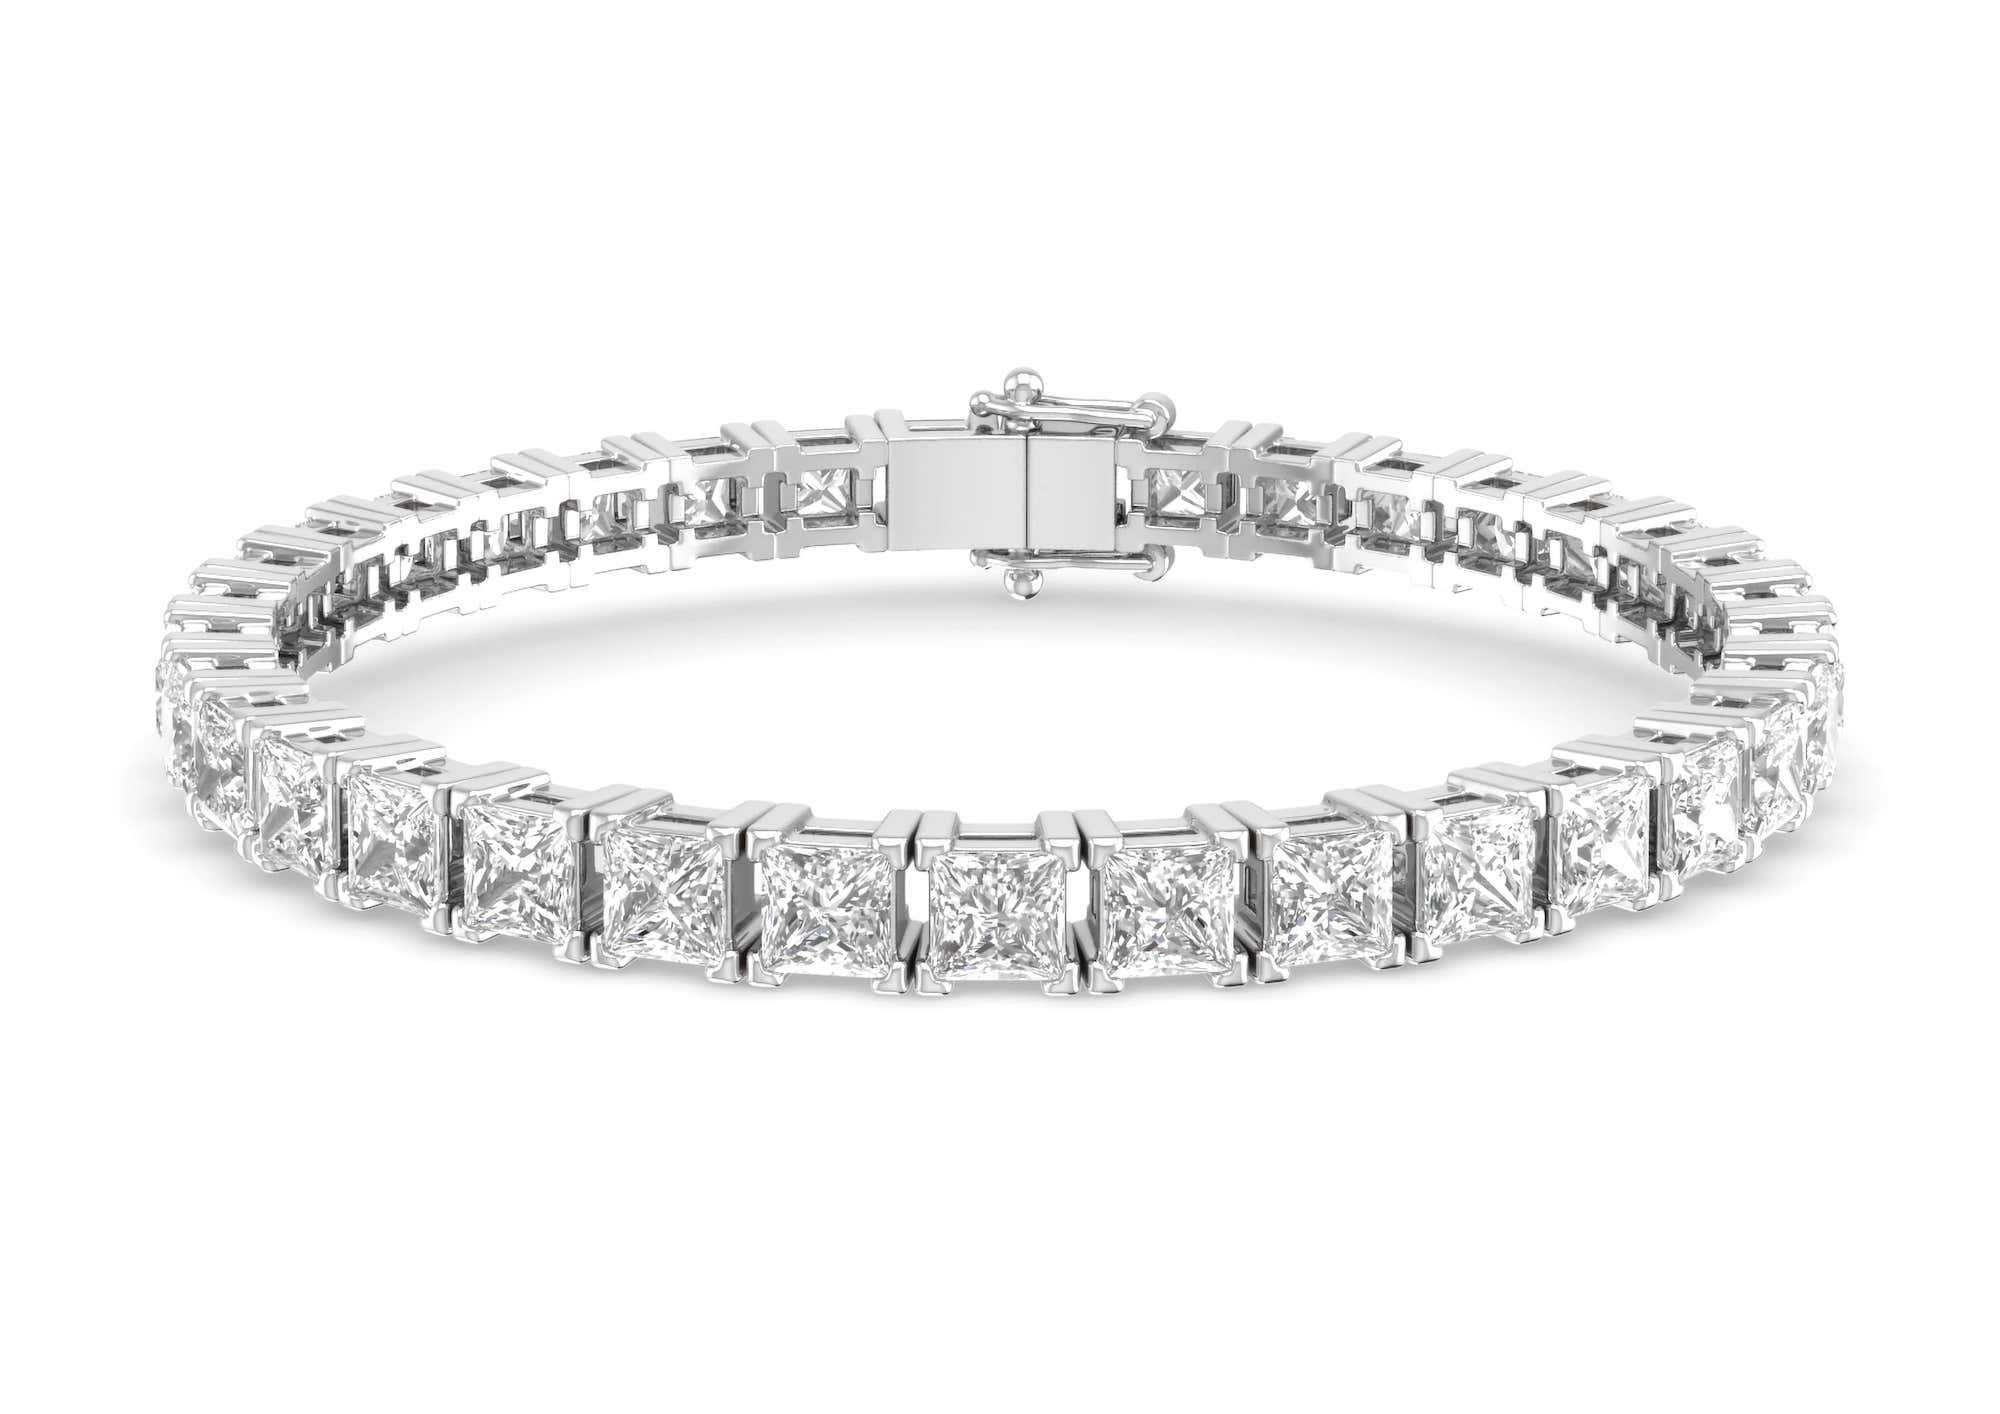 Jewelry Masters : 7.54 Carat Box Shape Princess Diamond Tennis Bracelet  [491-BW] - $6495.00 (13000.00)